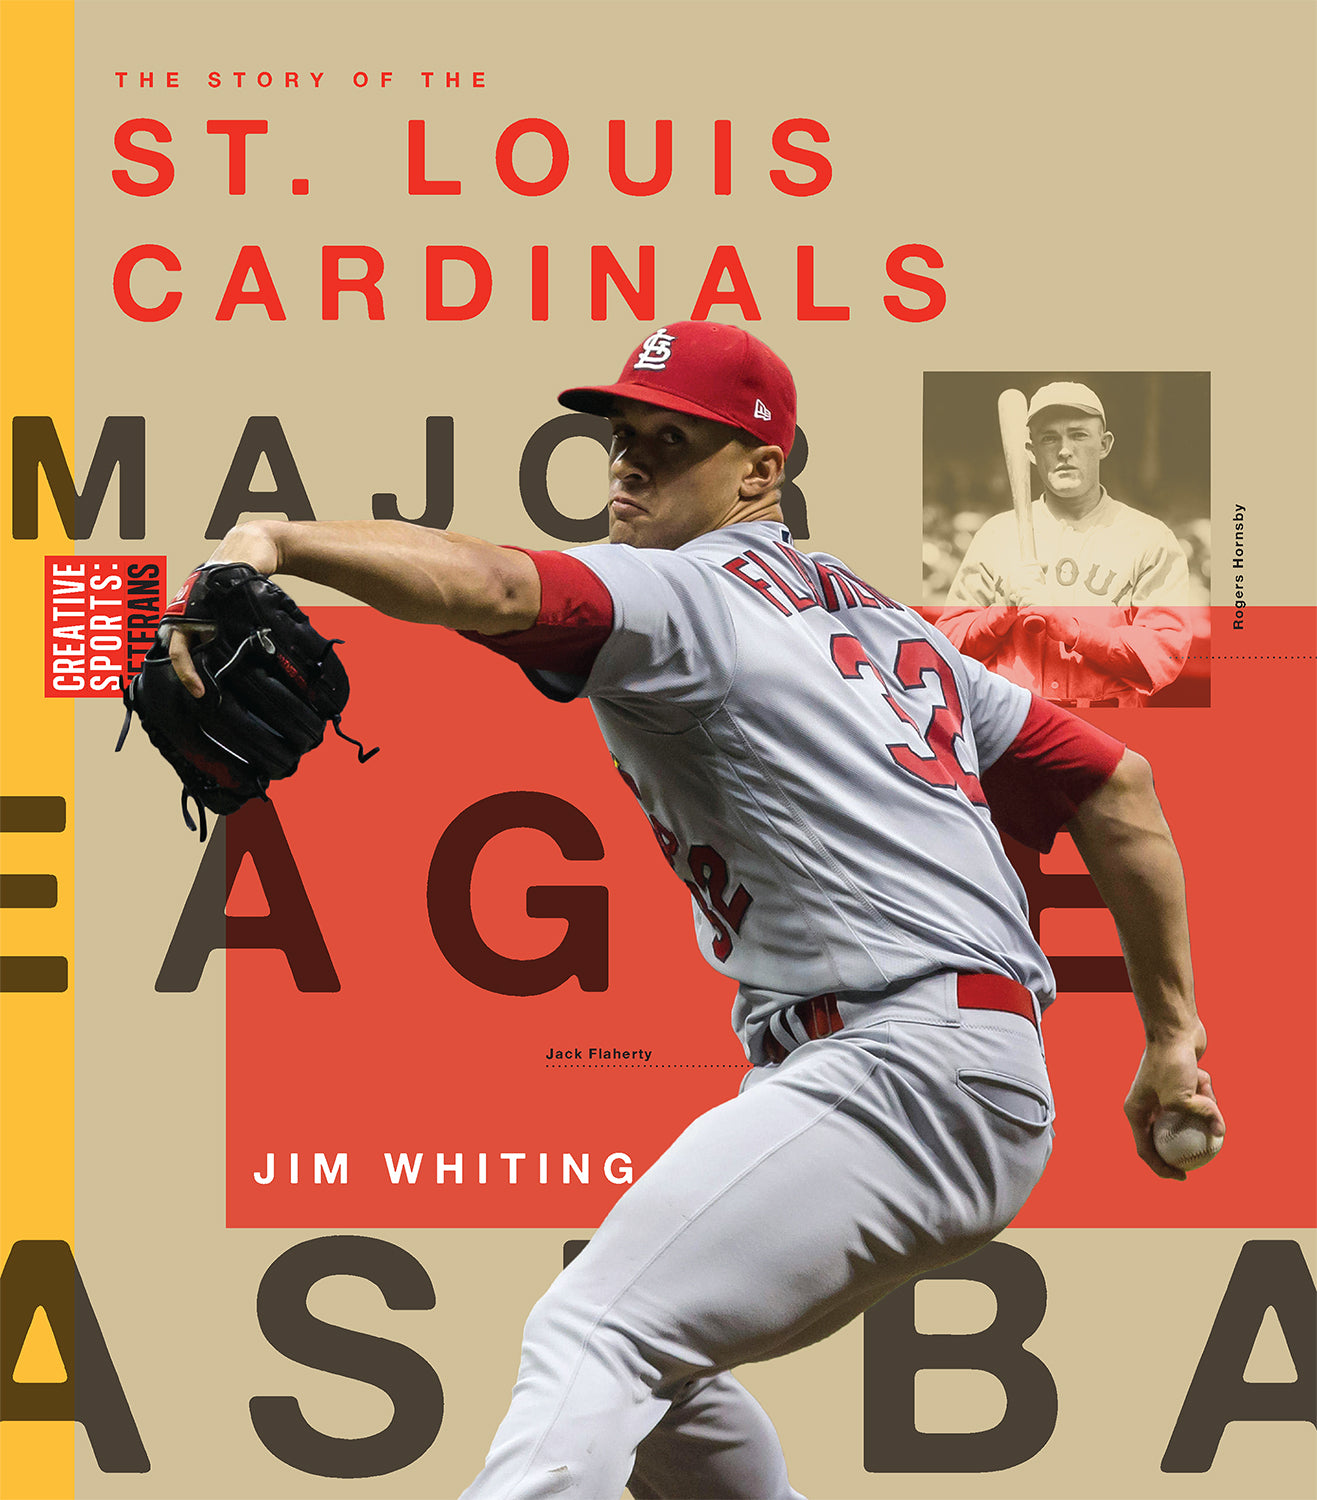 Creative Sports: St. Louis Cardinals – The Creative Company Shop